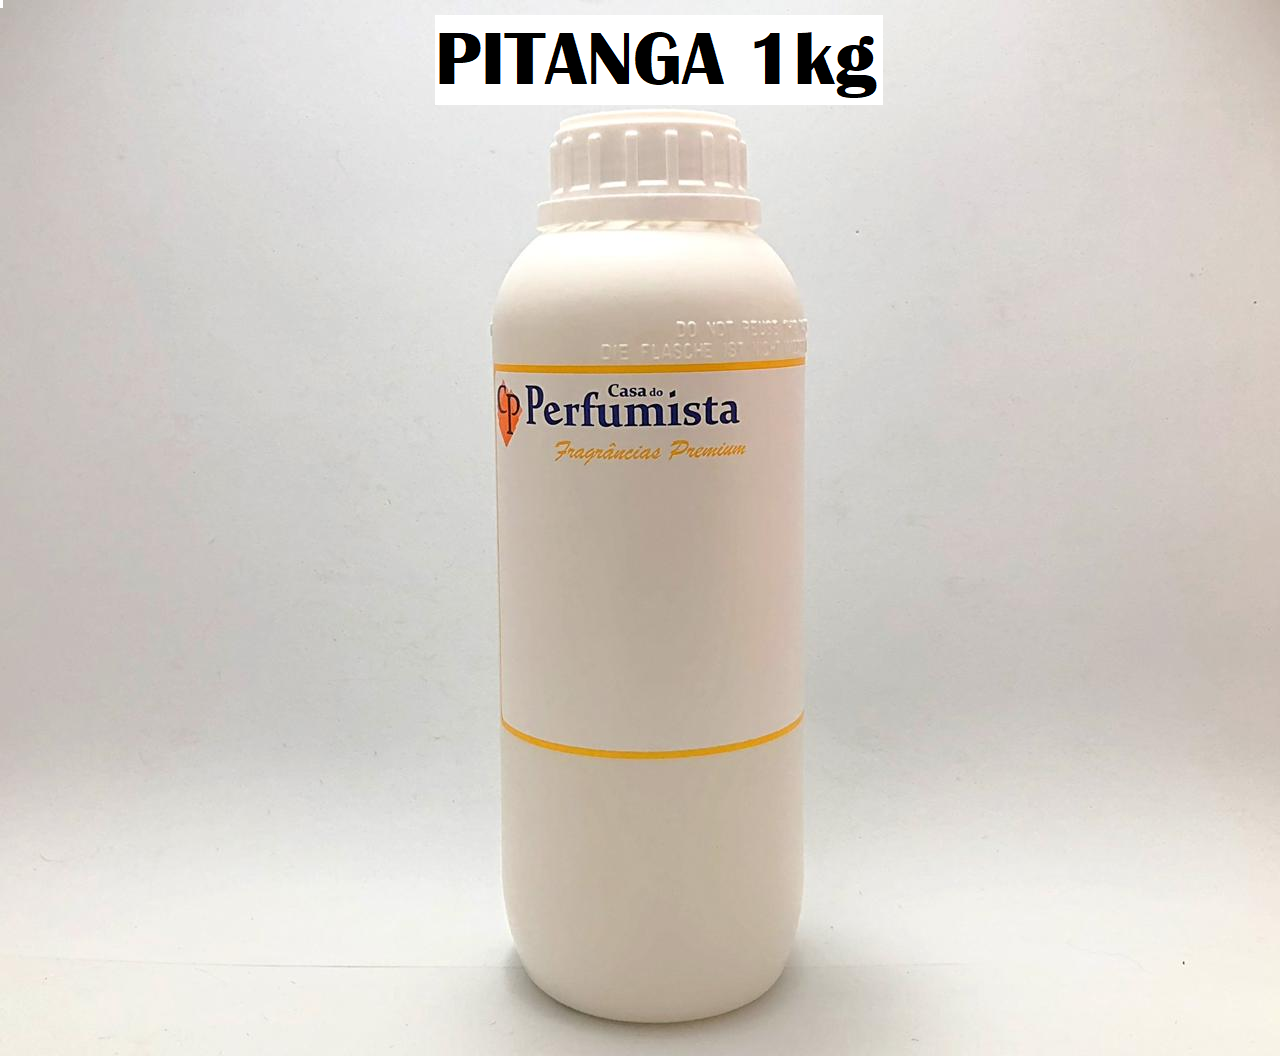 PITANGA - 1kg